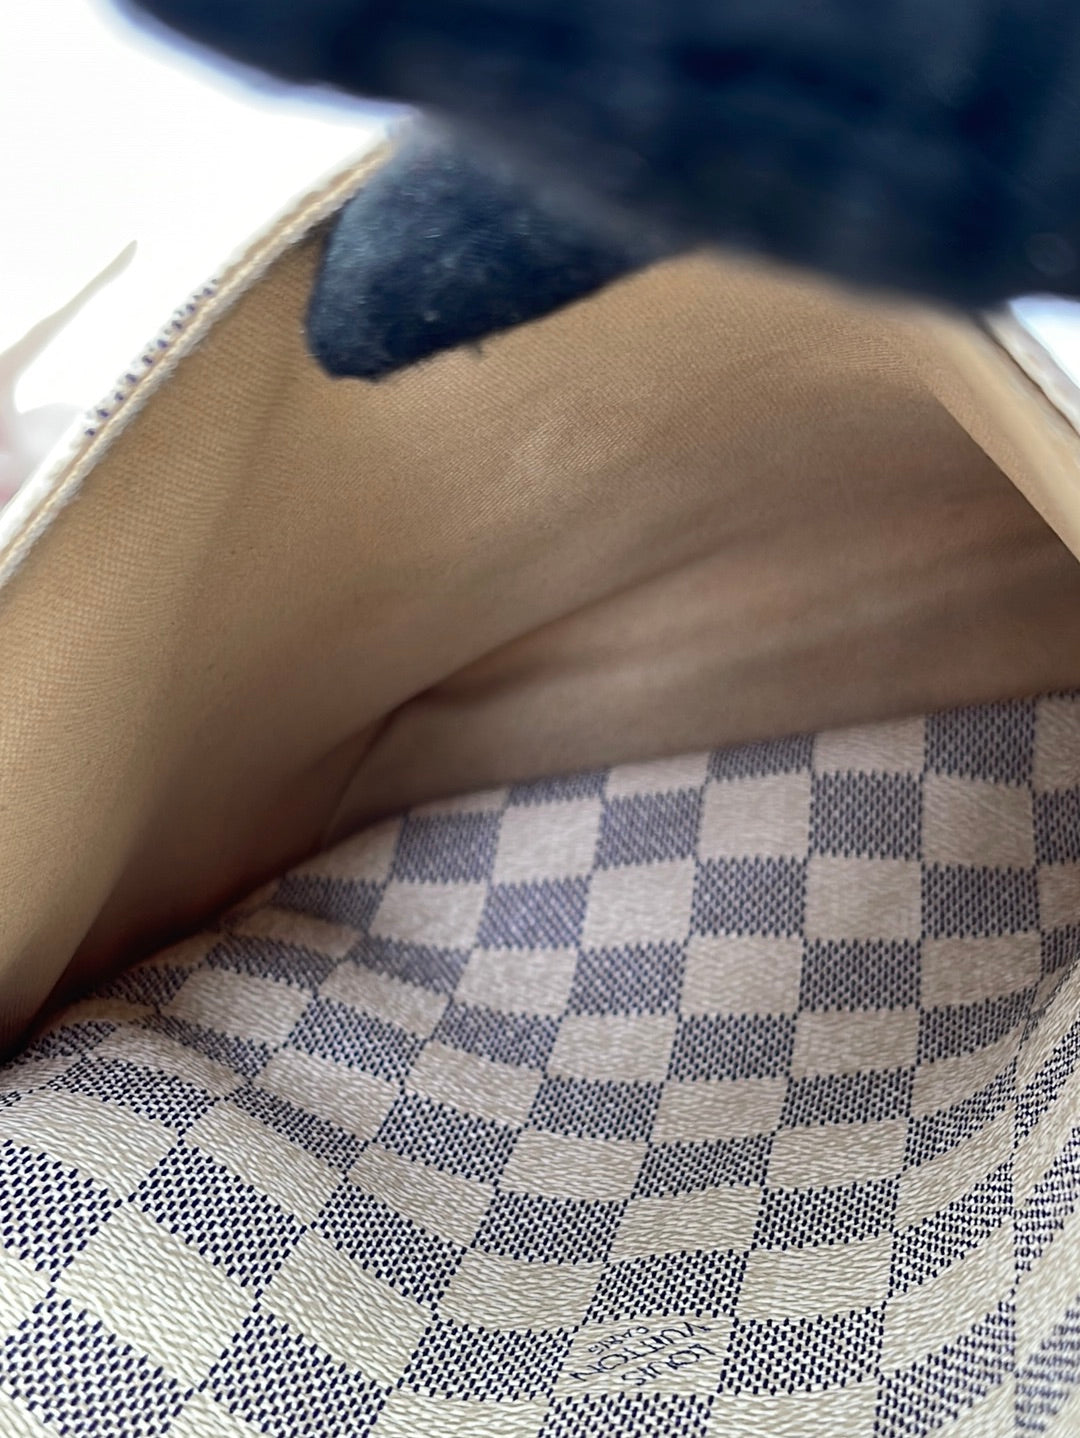 Louis Vuitton Damier Azur Totally MM Shoulder Bag ○ Labellov